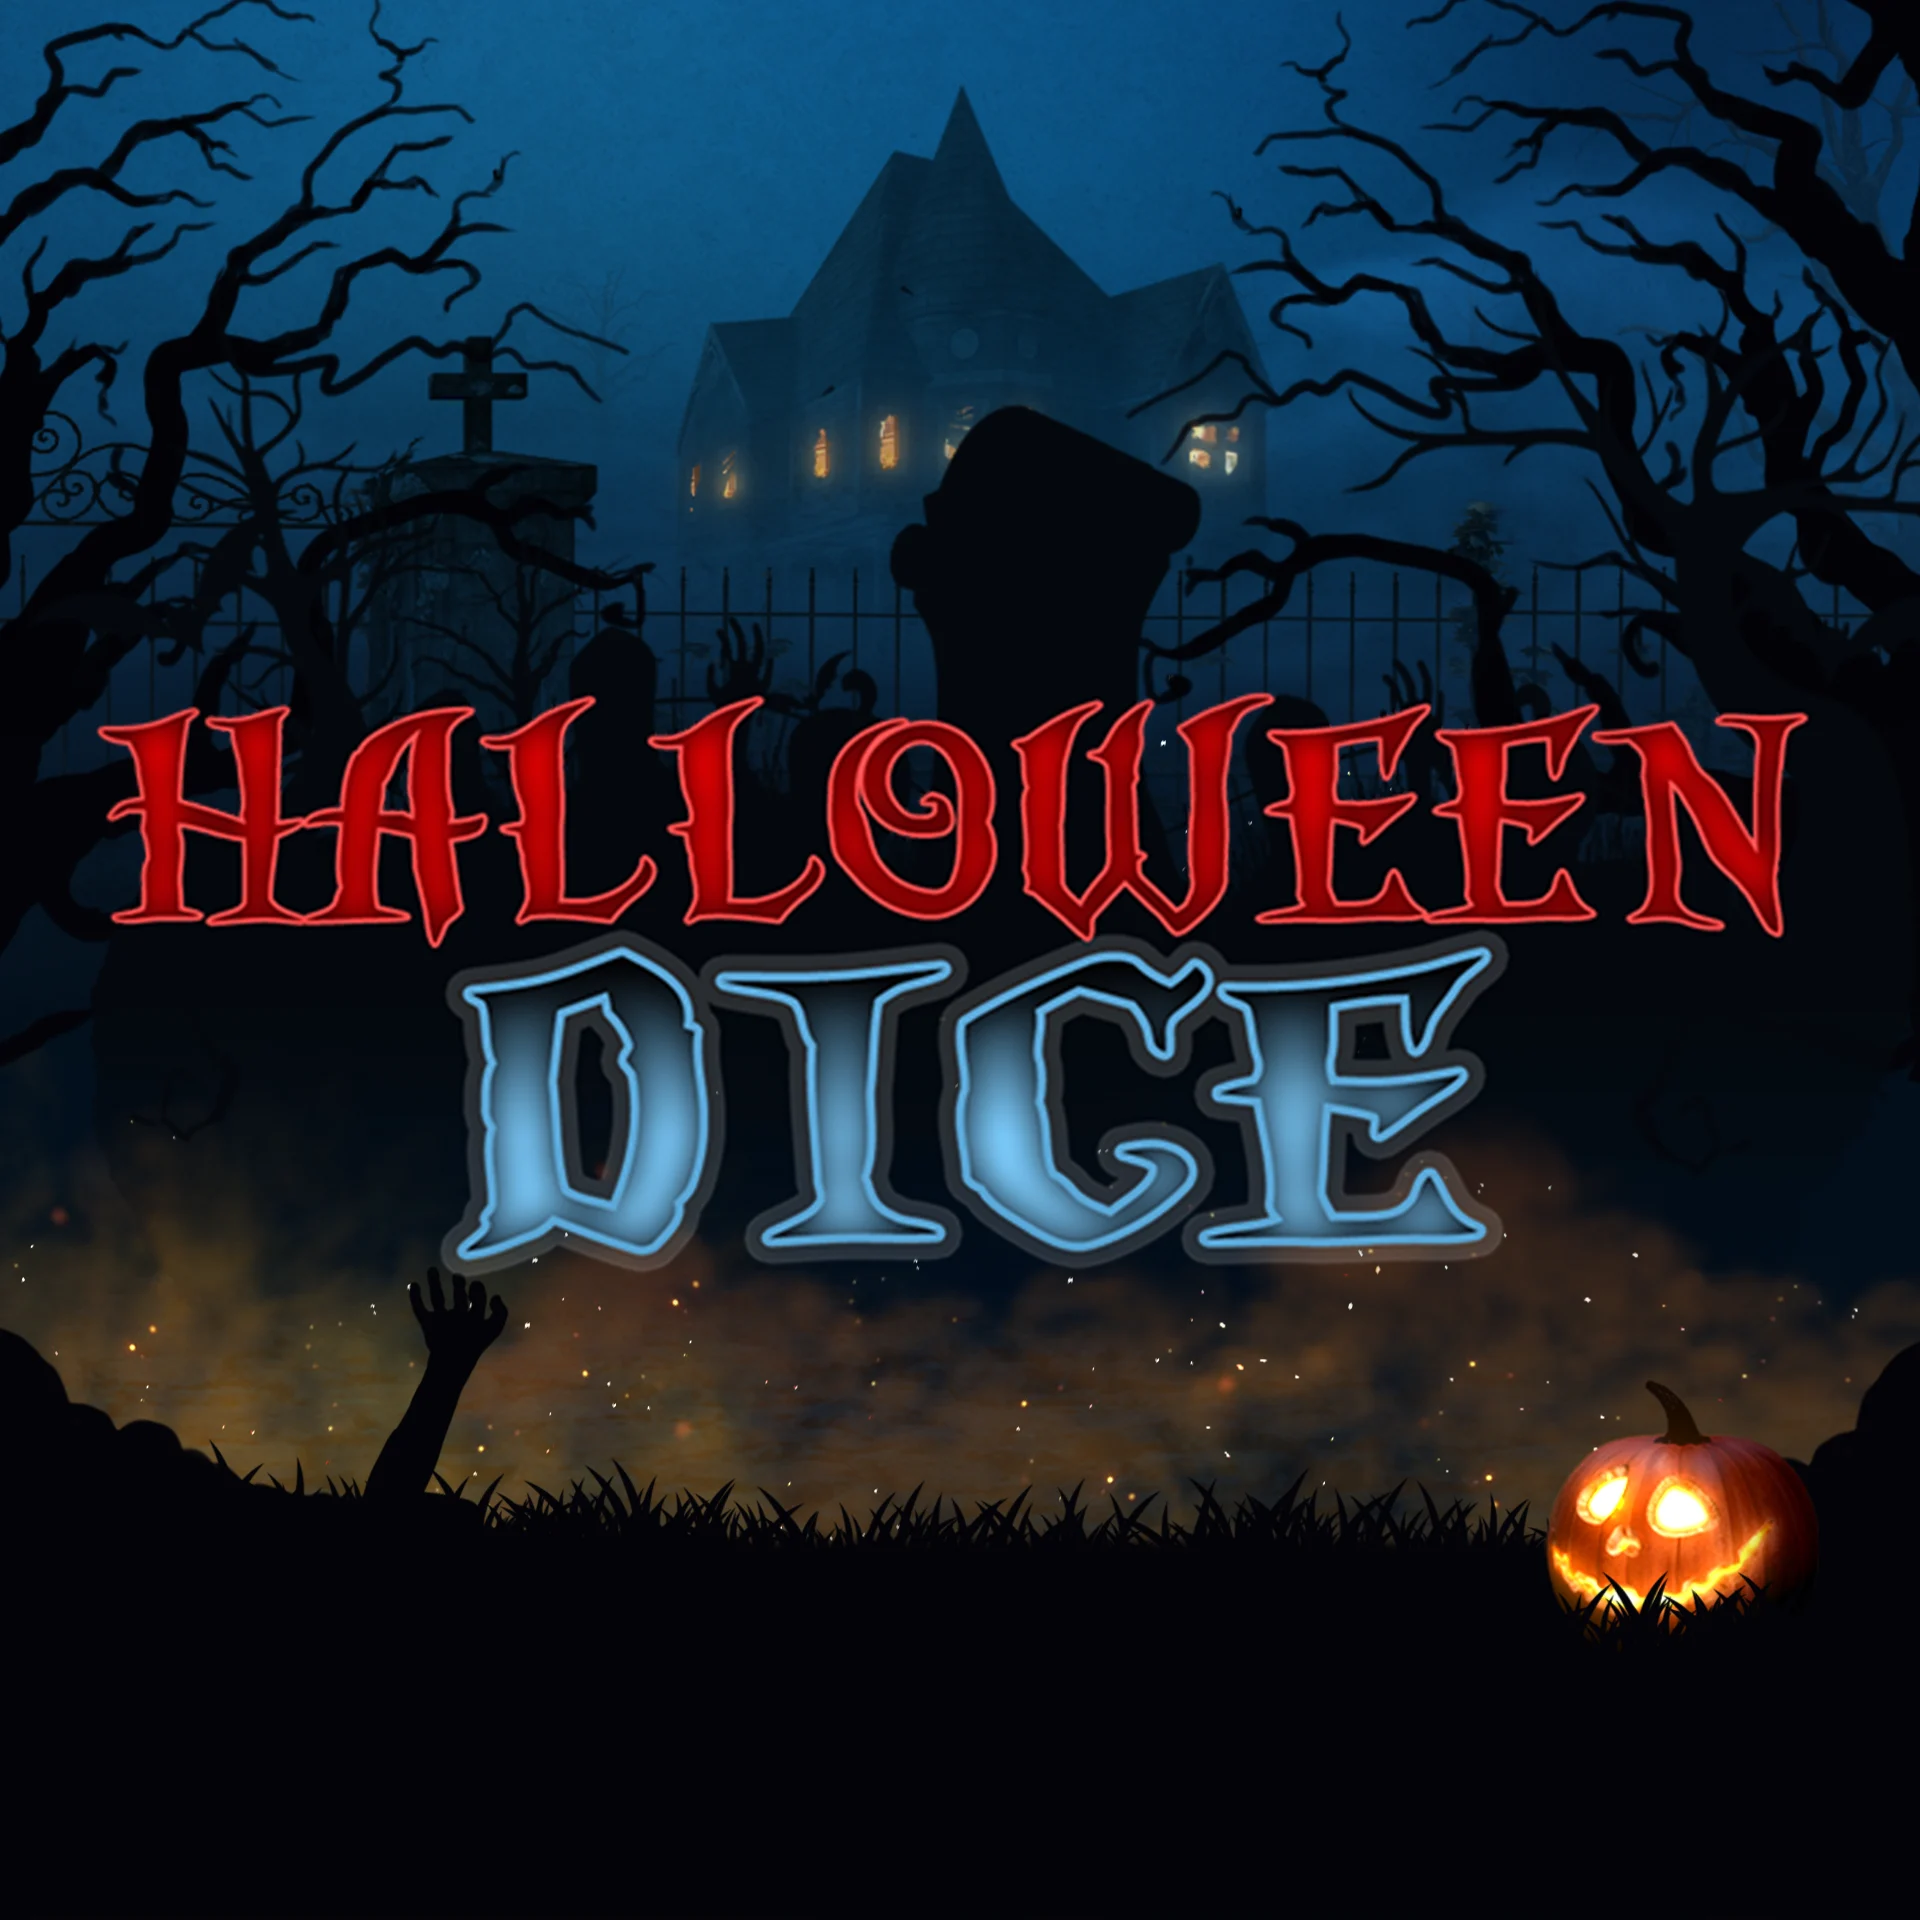 Play Halloween Dice on Starcasinodice.be online casino